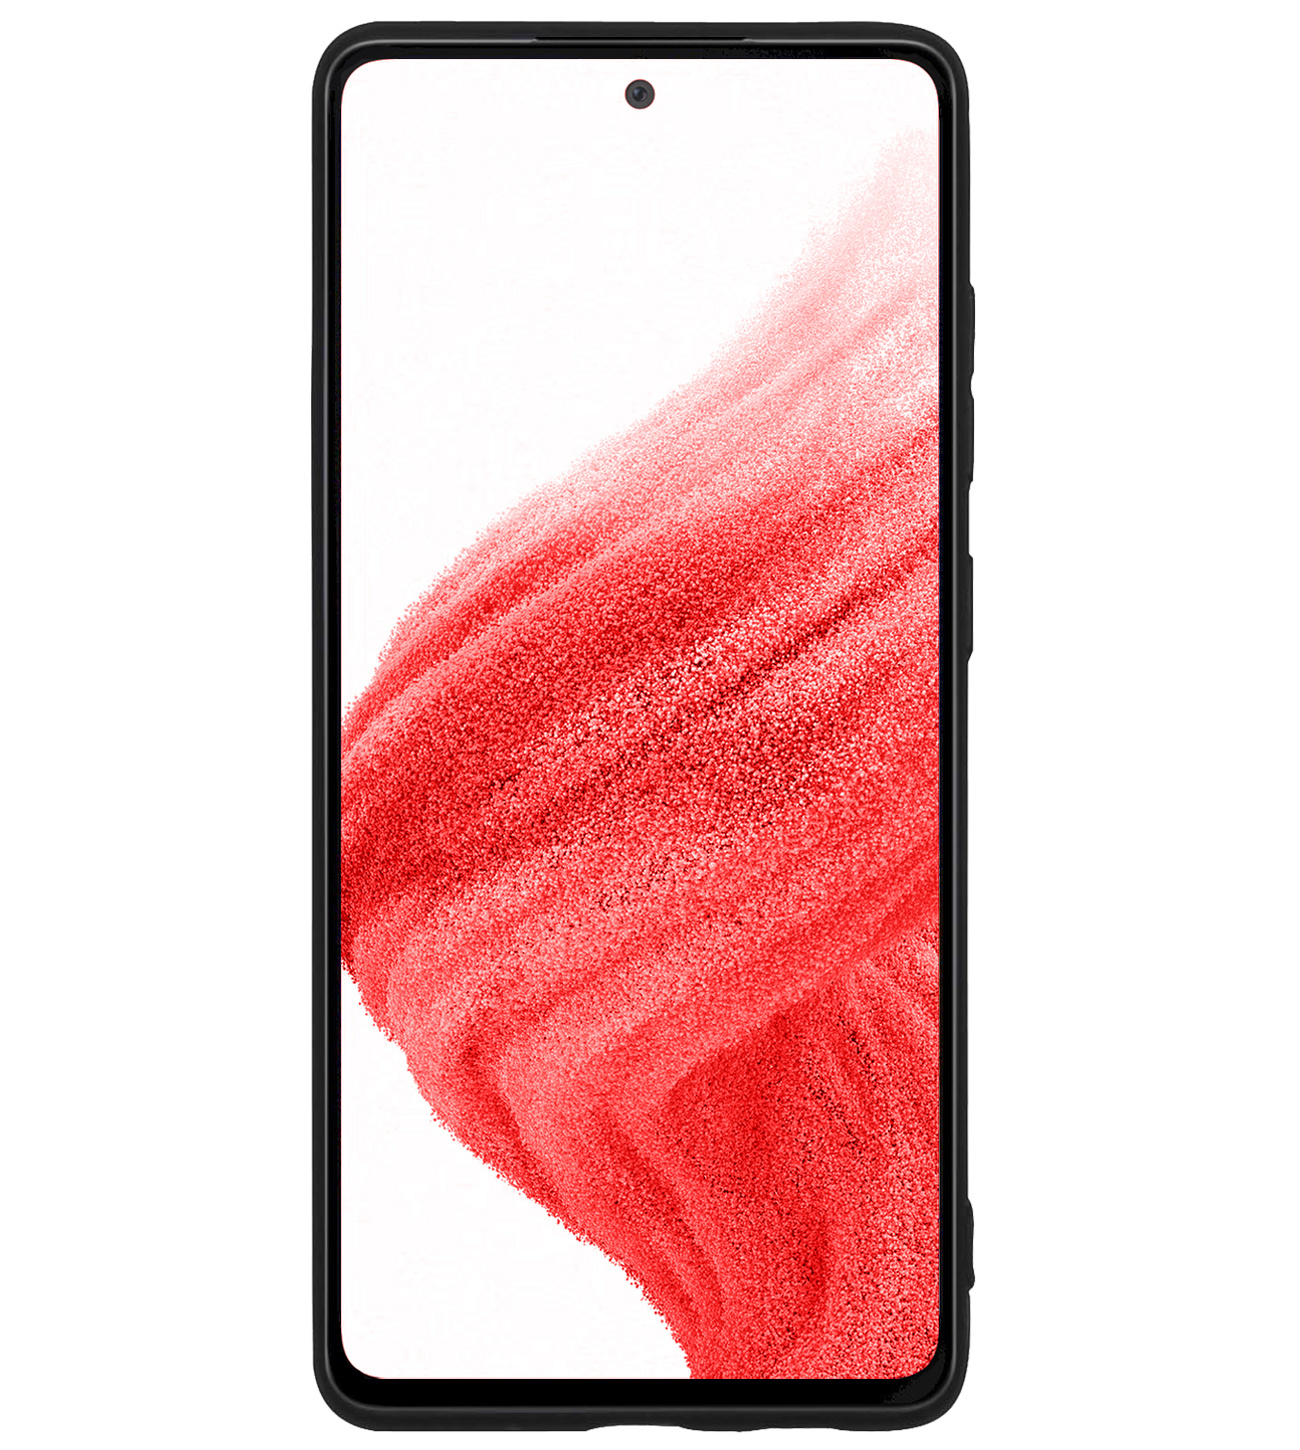 Hoes Geschikt voor Samsung A53 Hoesje Siliconen Back Cover Case - Hoesje Geschikt voor Samsung Galaxy A53 Hoes Cover Hoesje - Zwart